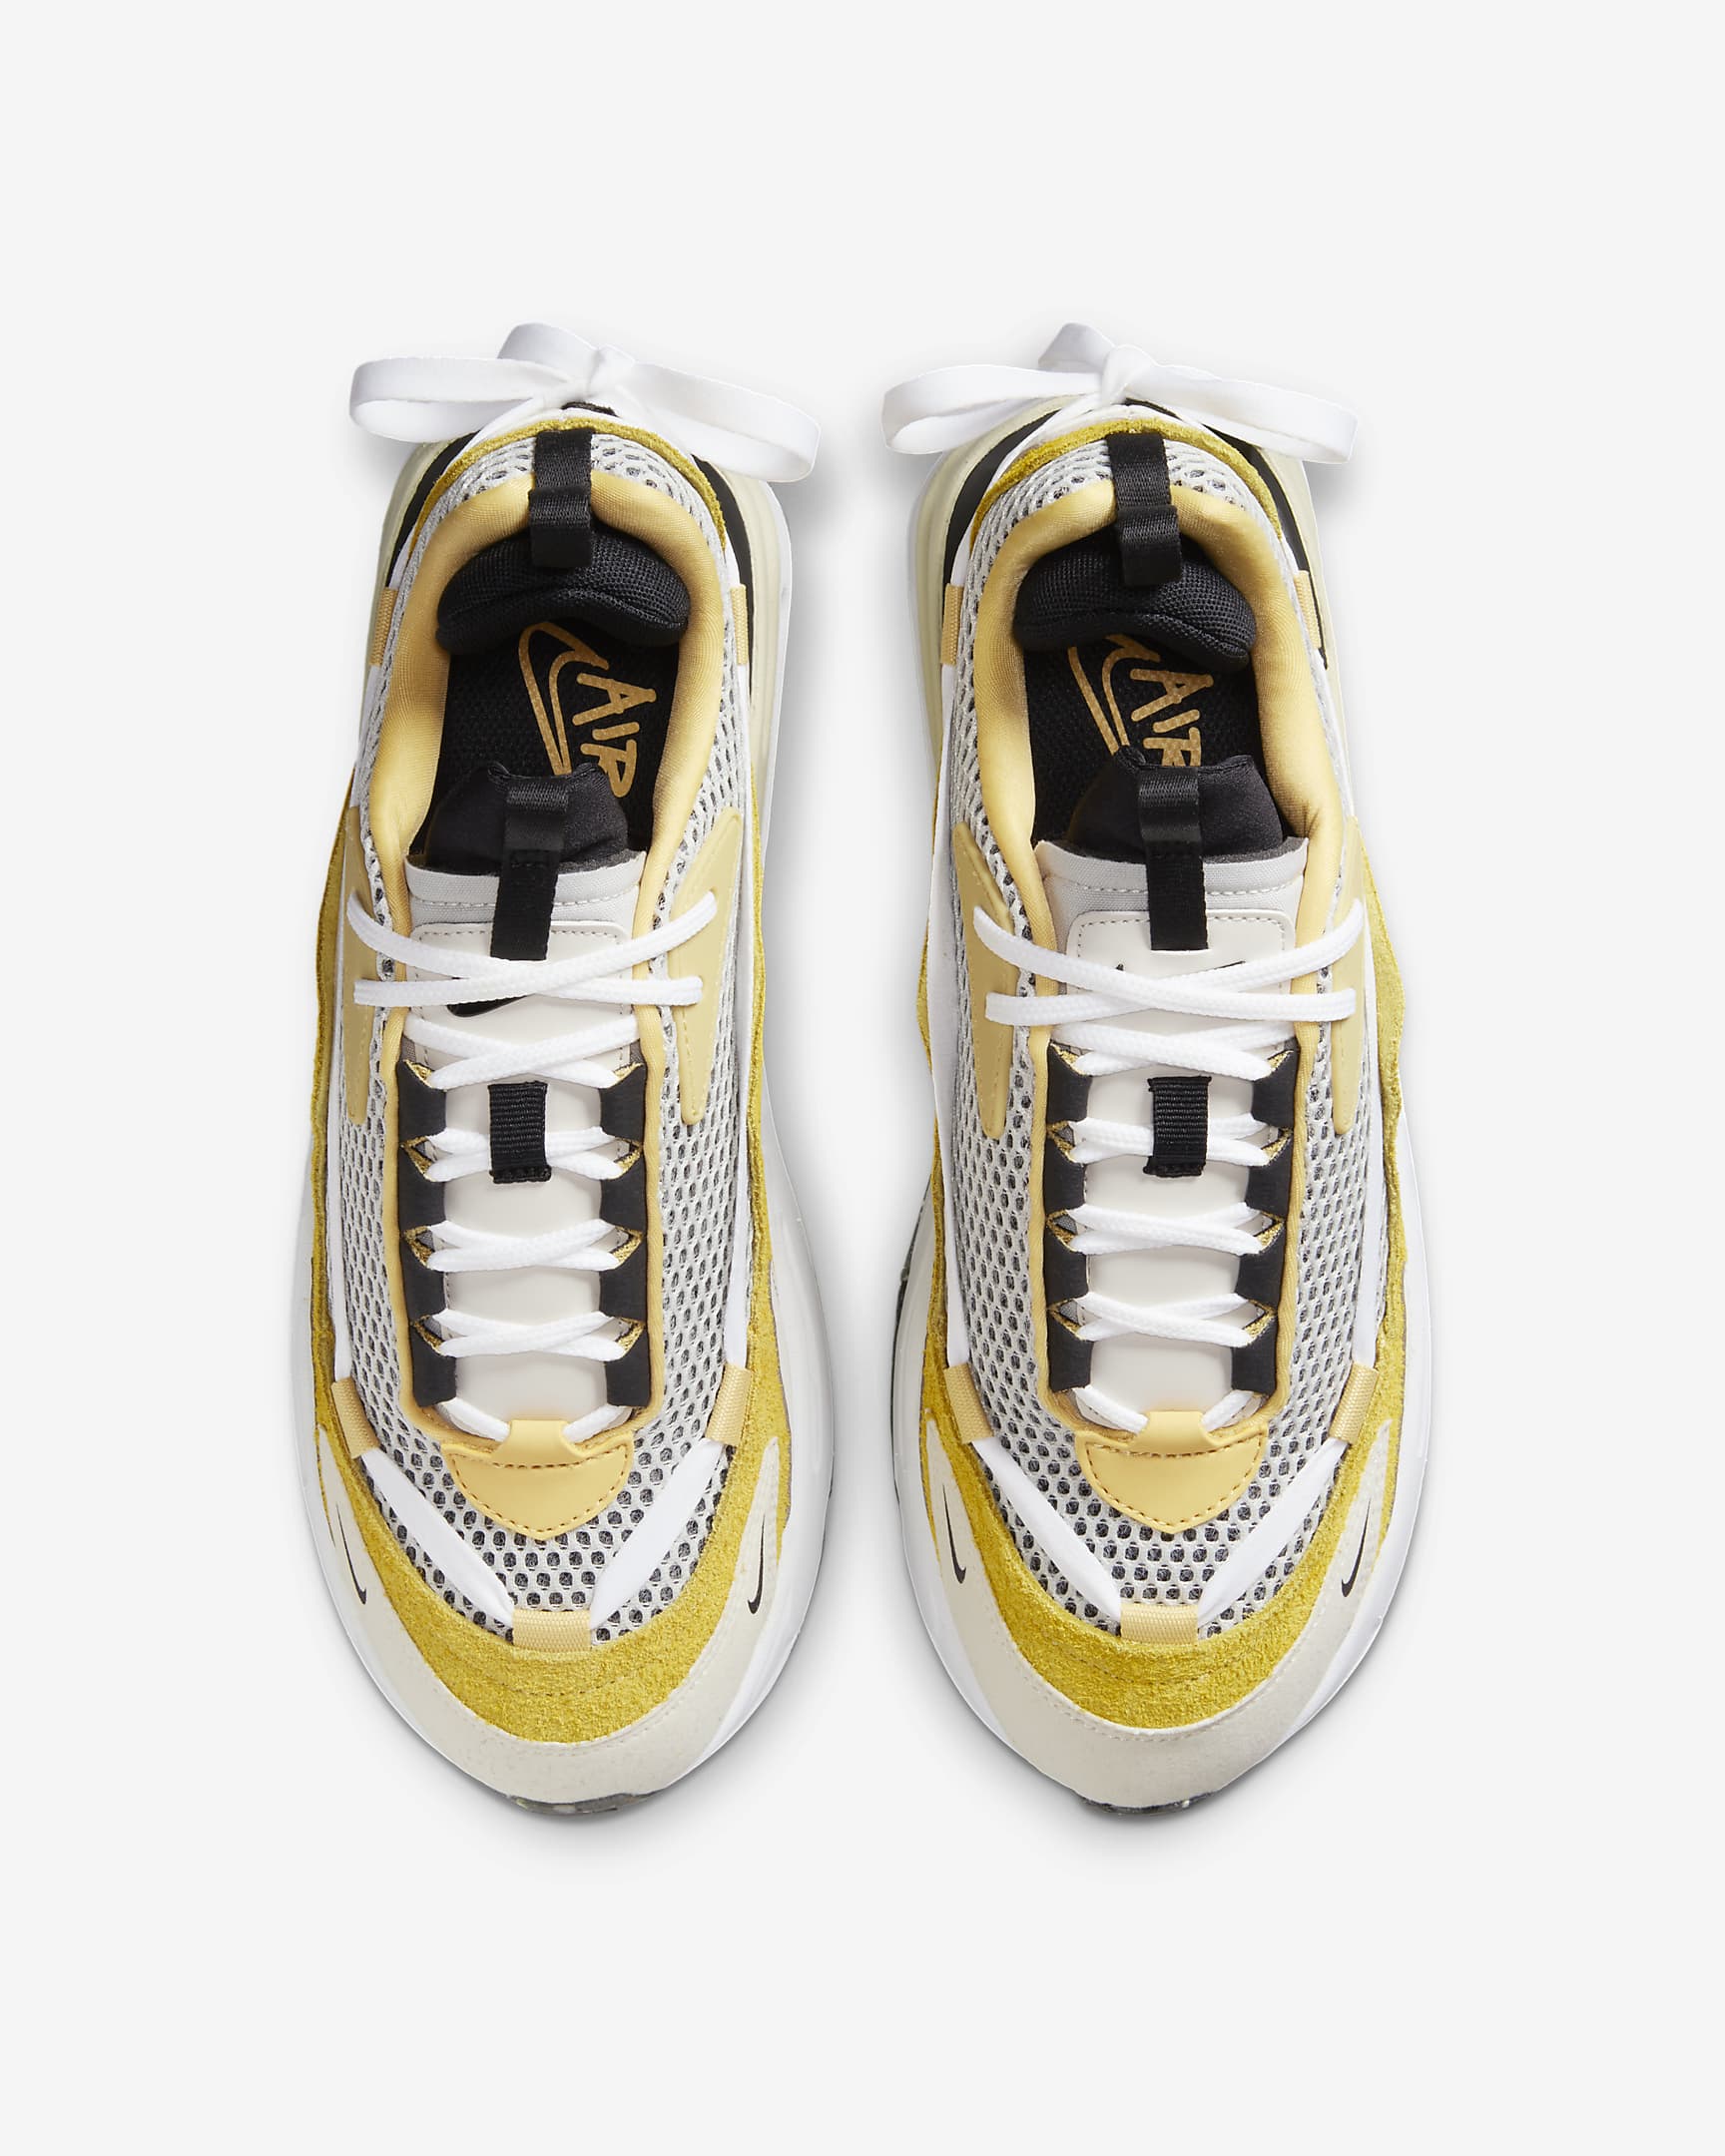 Nike Air Max Furyosa Women's Shoes - Light Bone/Saturn Gold/Fossil/Black